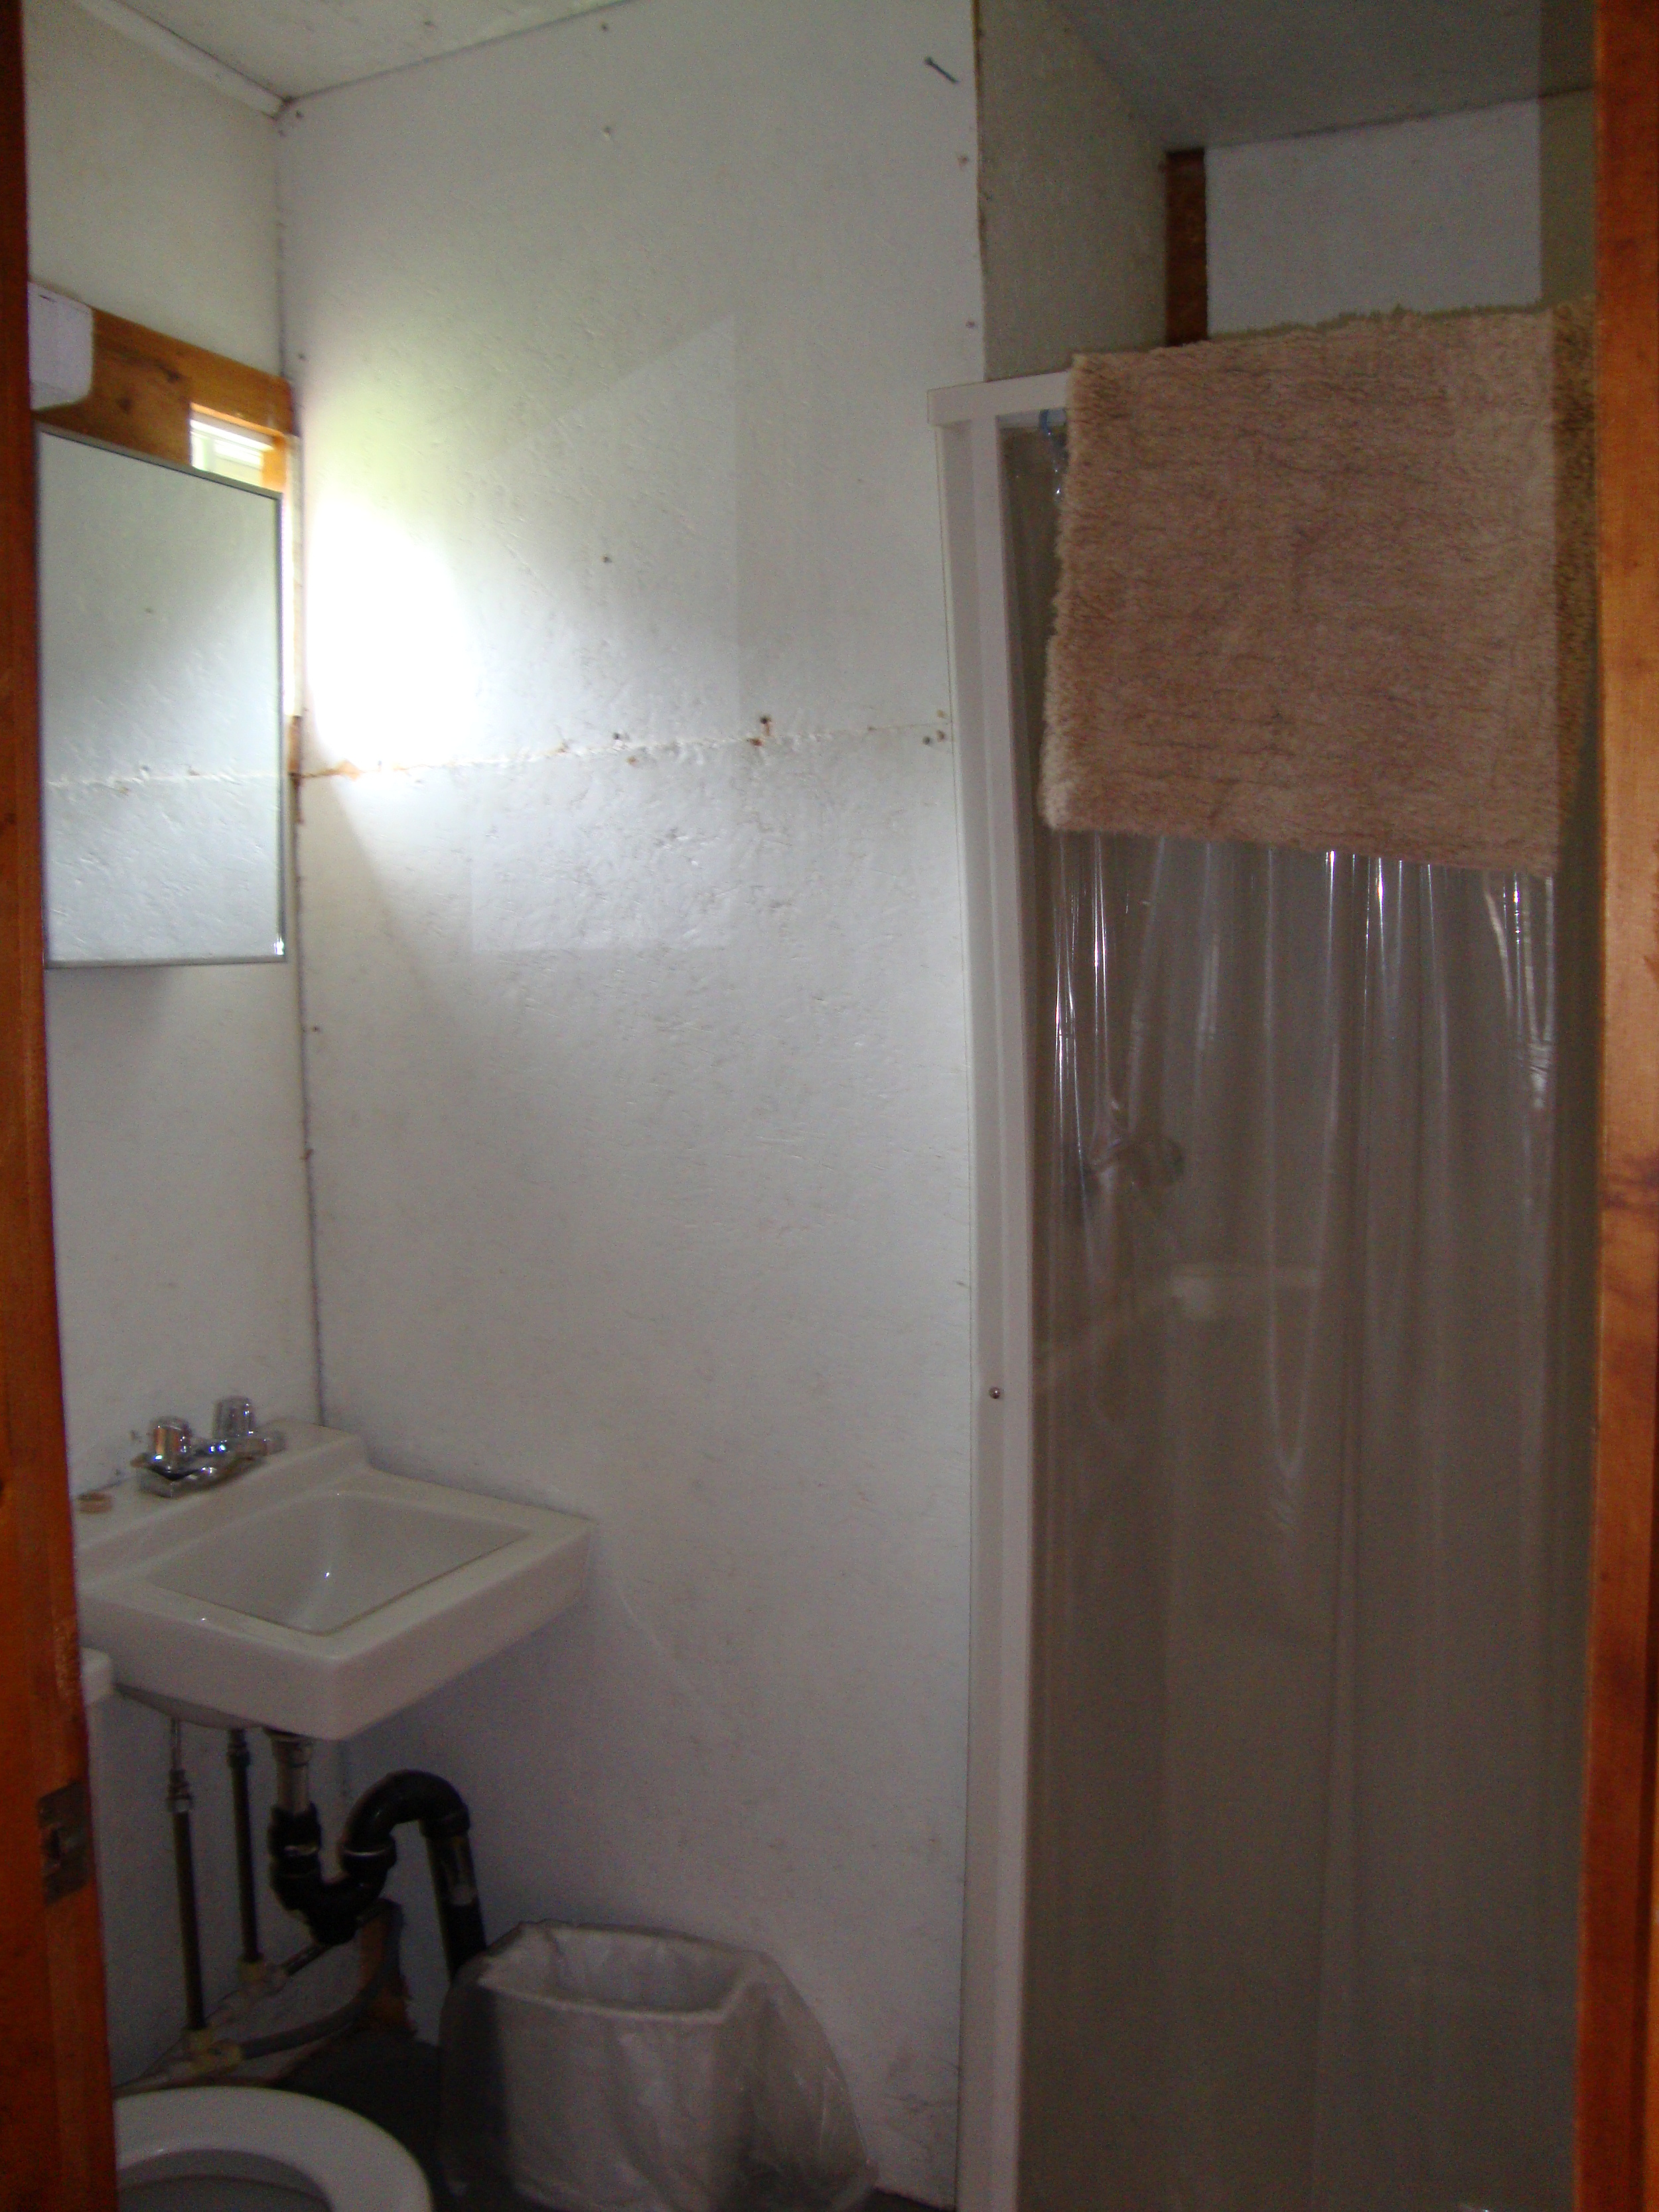 Cabin 4-5 Bathroom.jpg